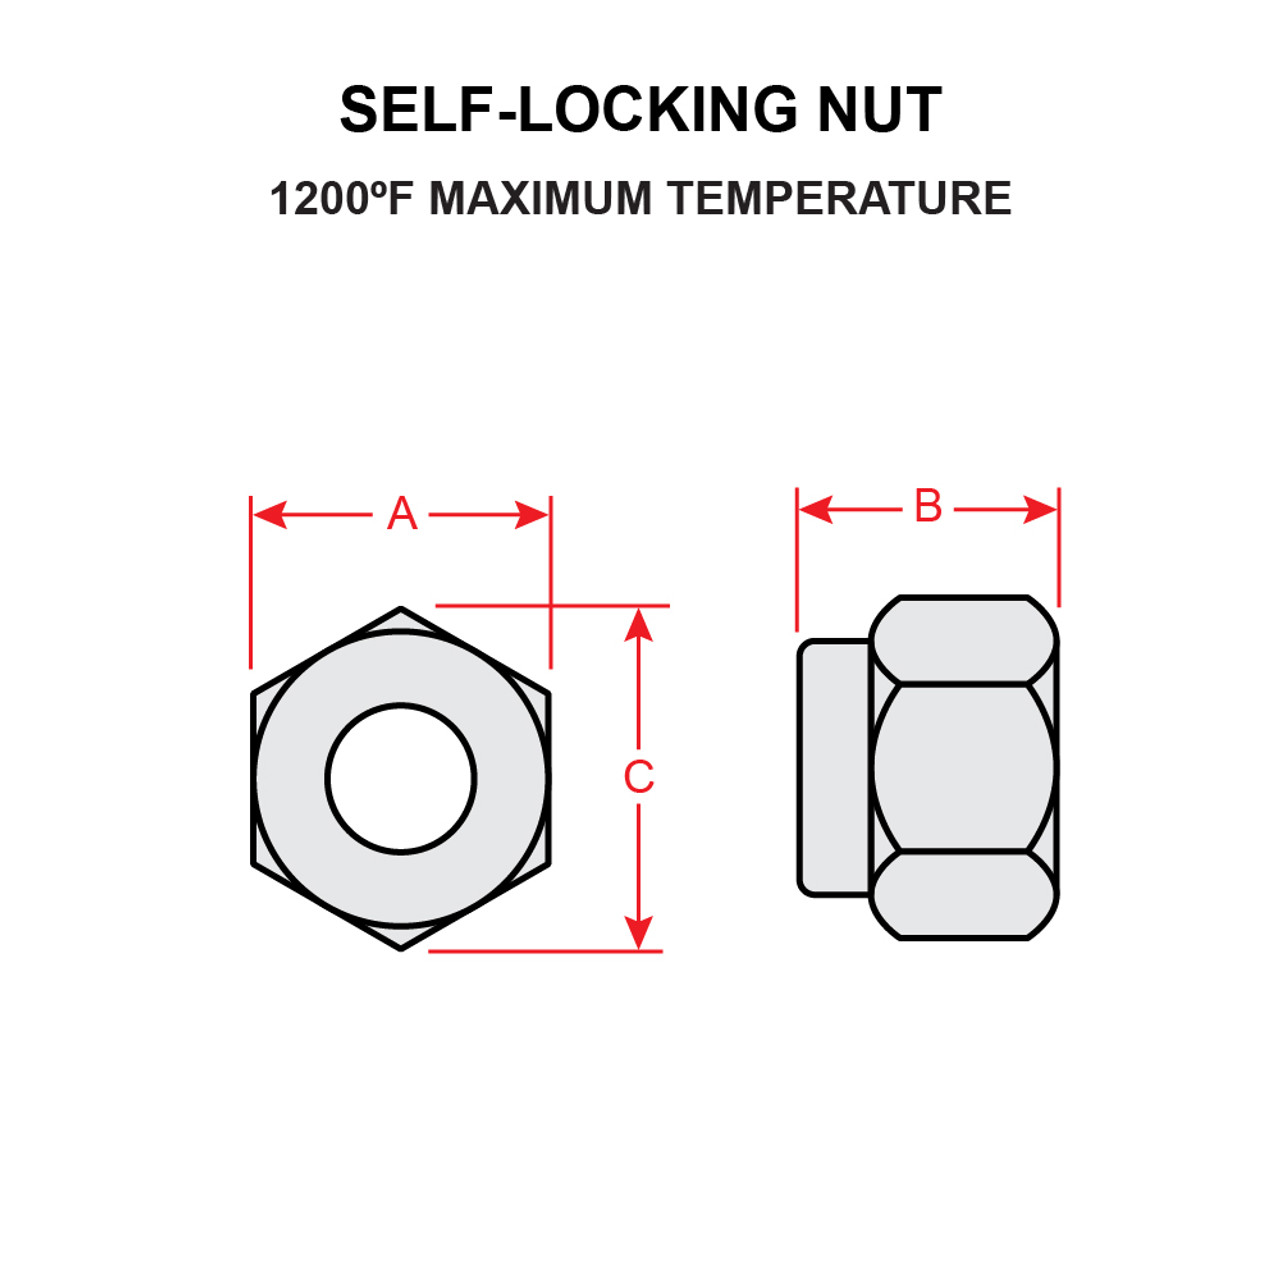 MS20500-428   SELF-LOCKING NUT